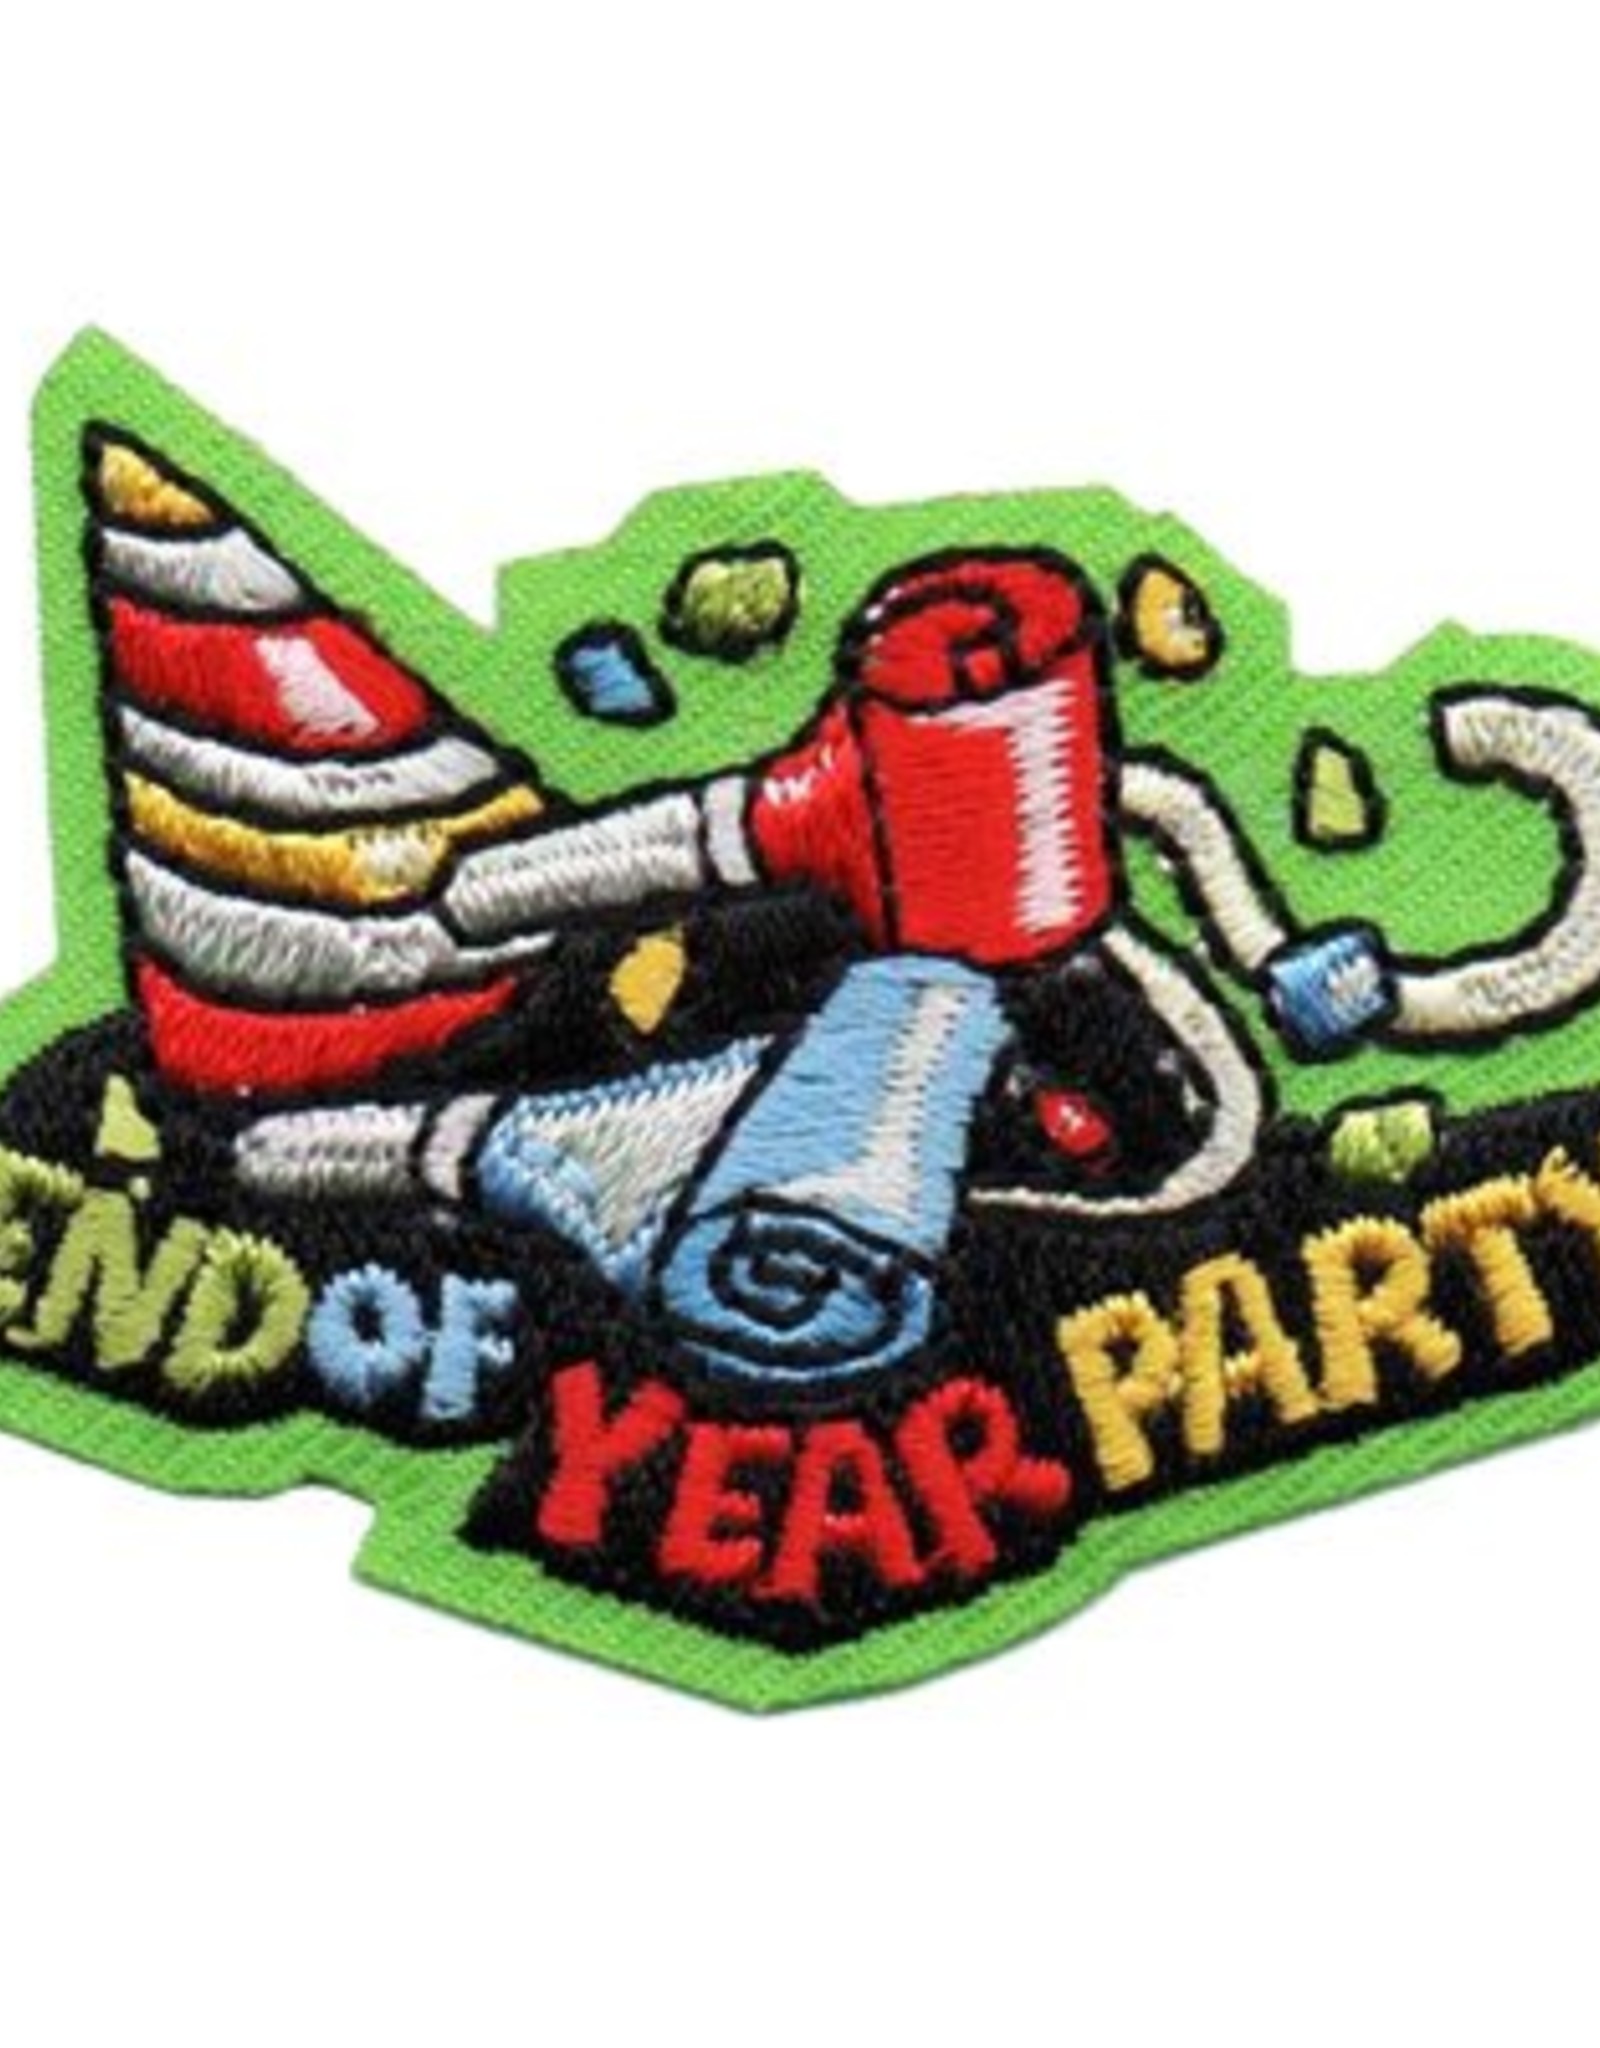 Advantage Emblem & Screen Prnt *End of Year Party Fun Patch